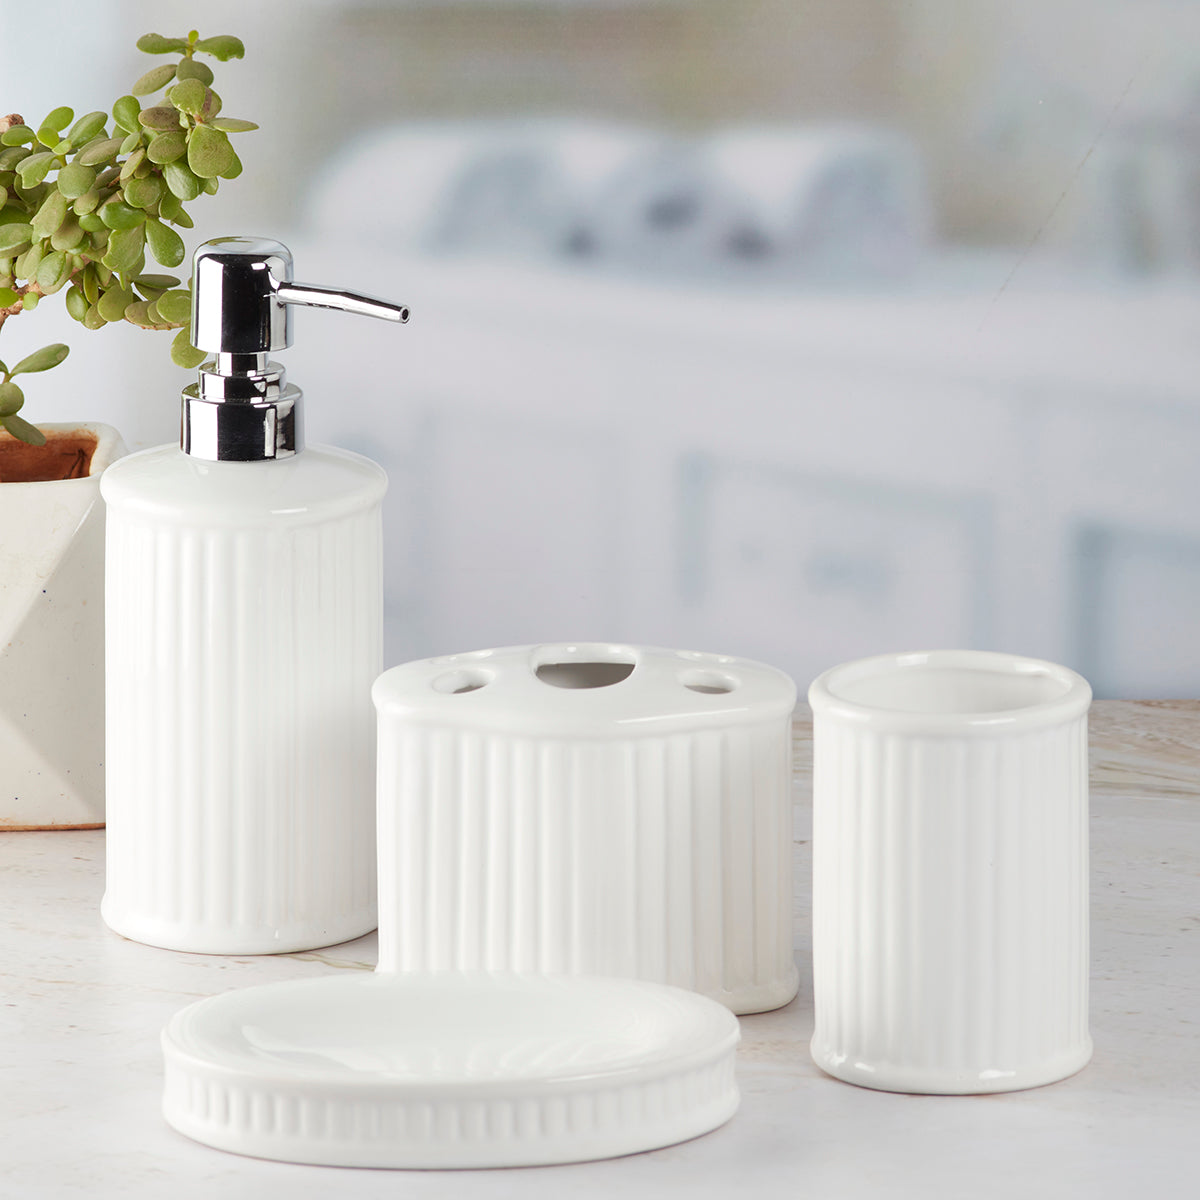 Ceramic Bathroom Accessories Set of 4 Bath Set with Soap Dispenser (8194)